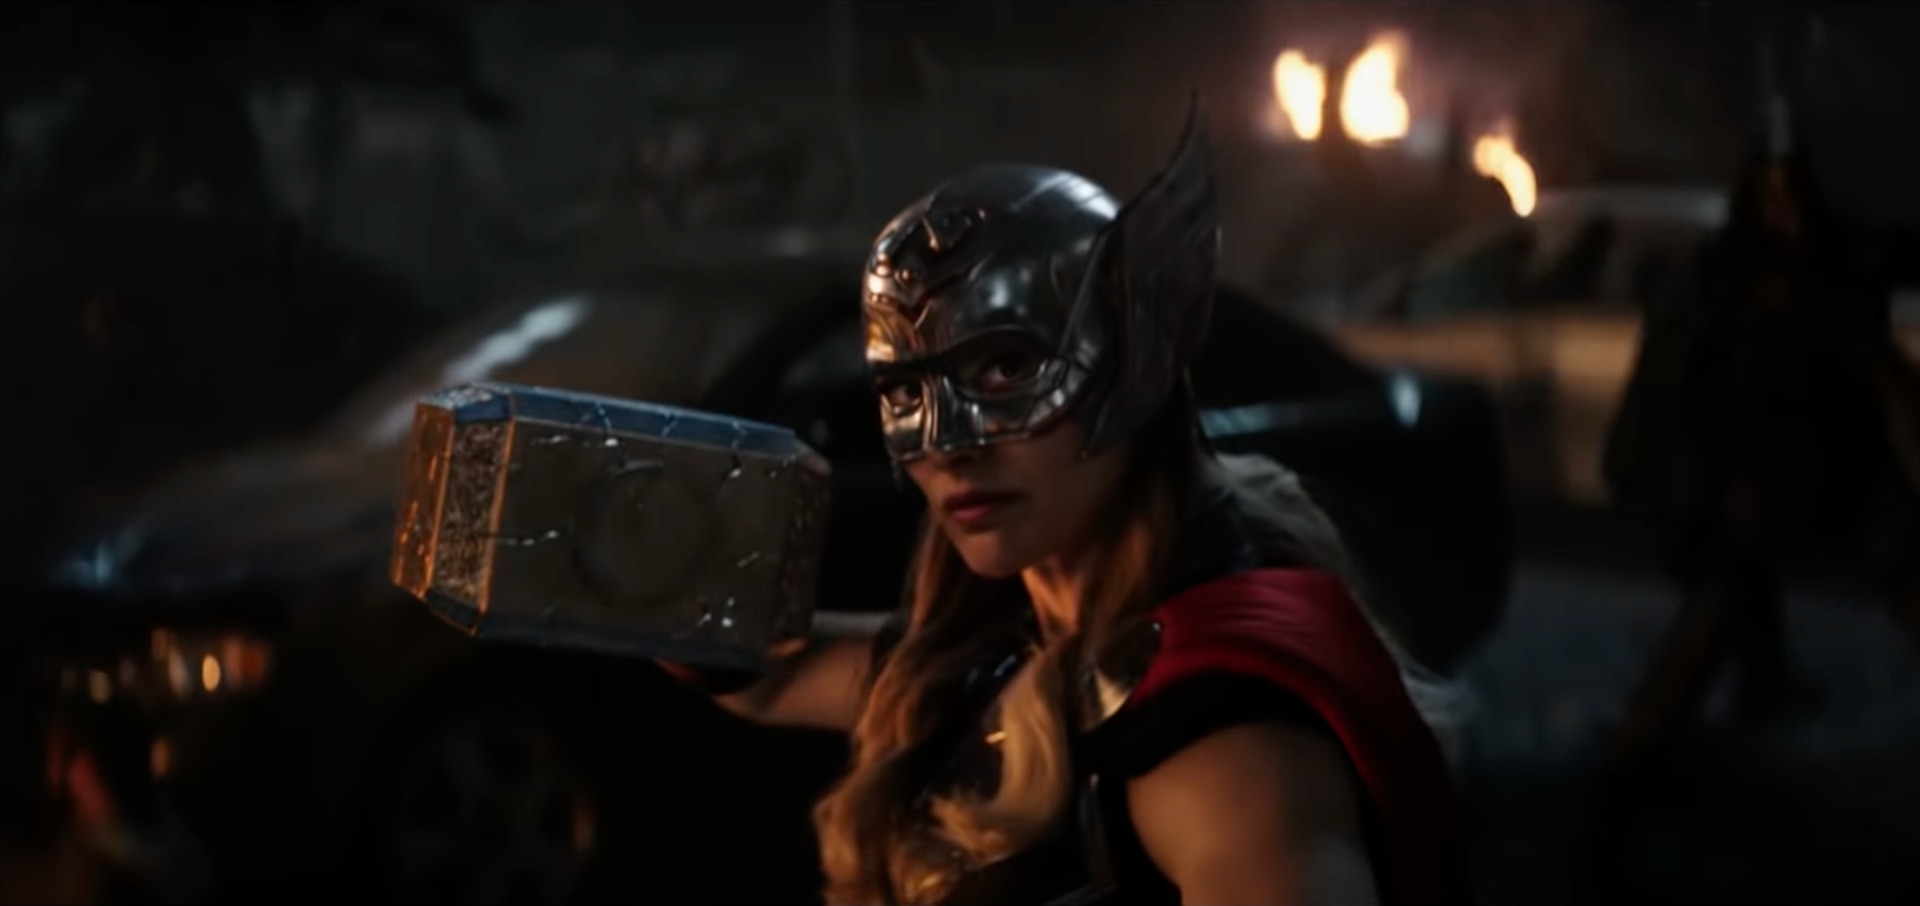 Natalie Portman in Thor: Love and Thunder (2022)